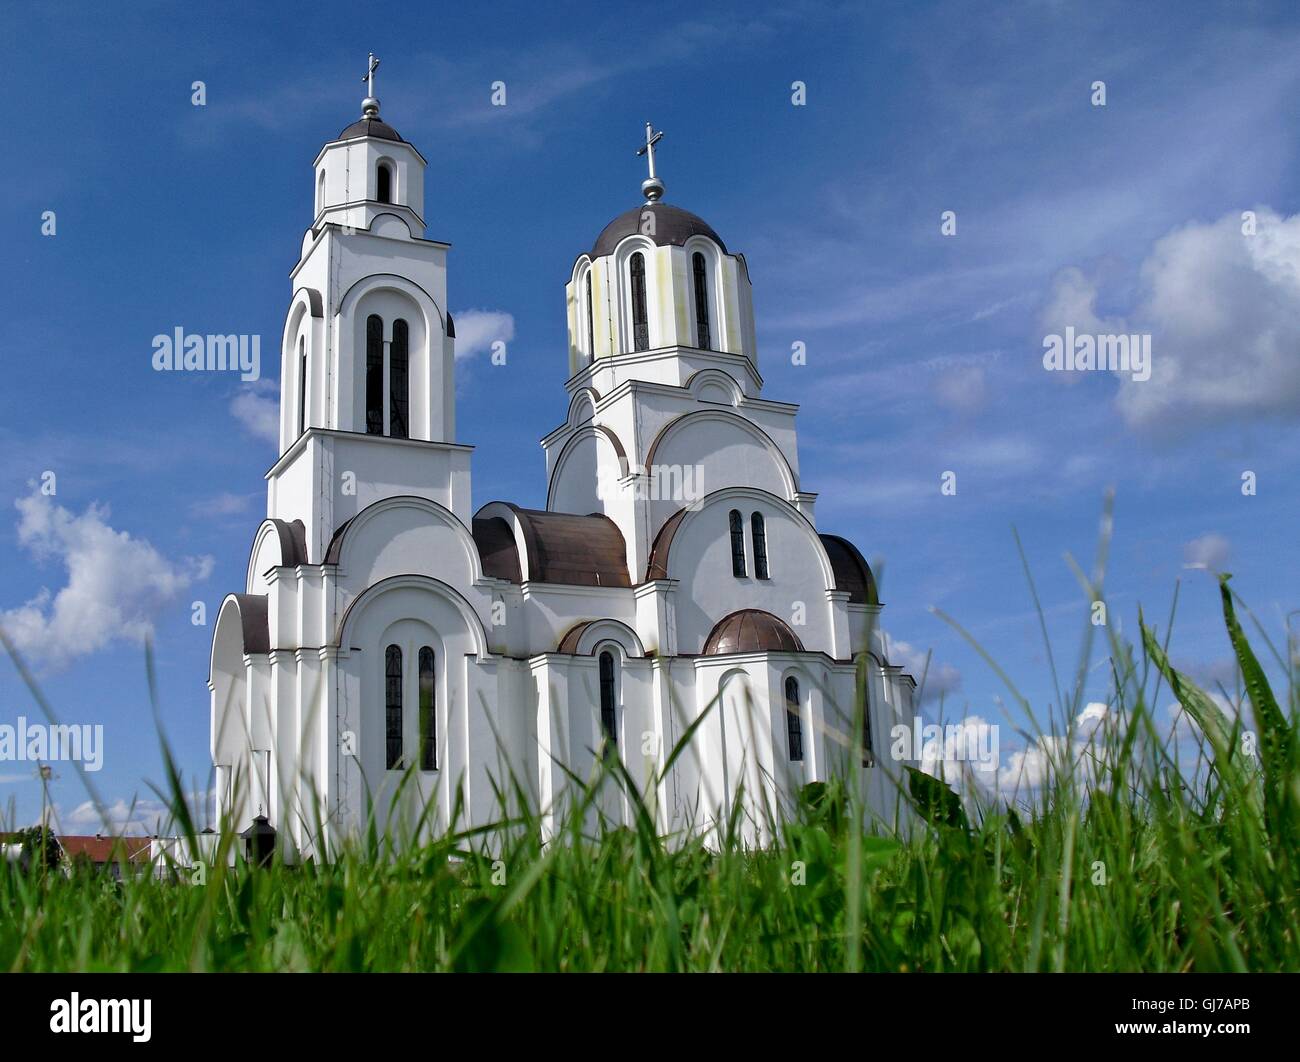 Serbian Orthodox church St. John the Theologian,Bac,Vojvodina,Serbia... Stock Photo